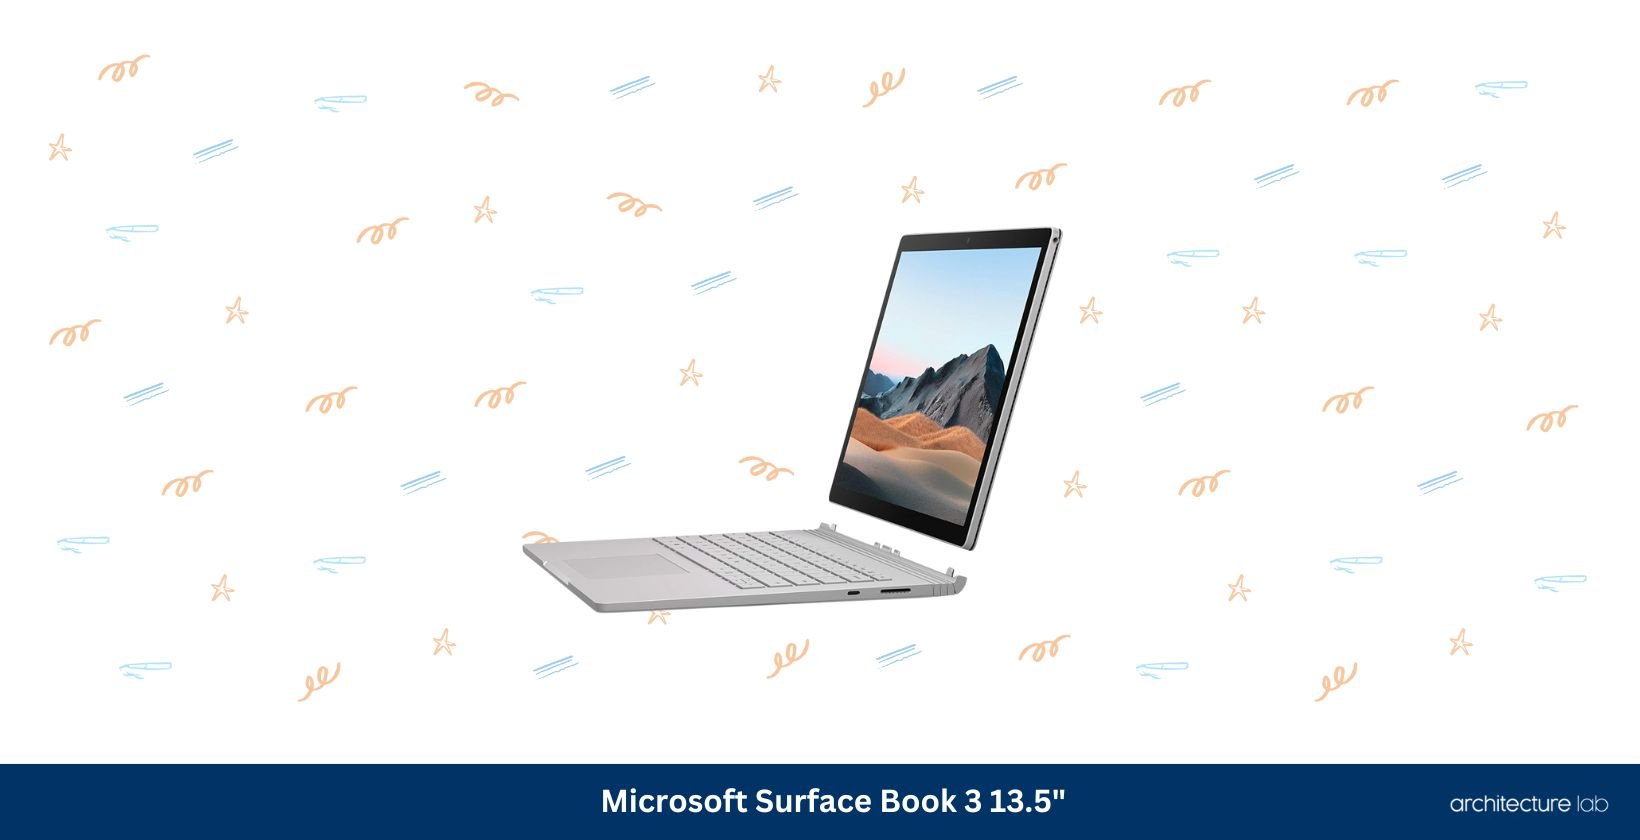 Microsoft surface book 3 13. 5